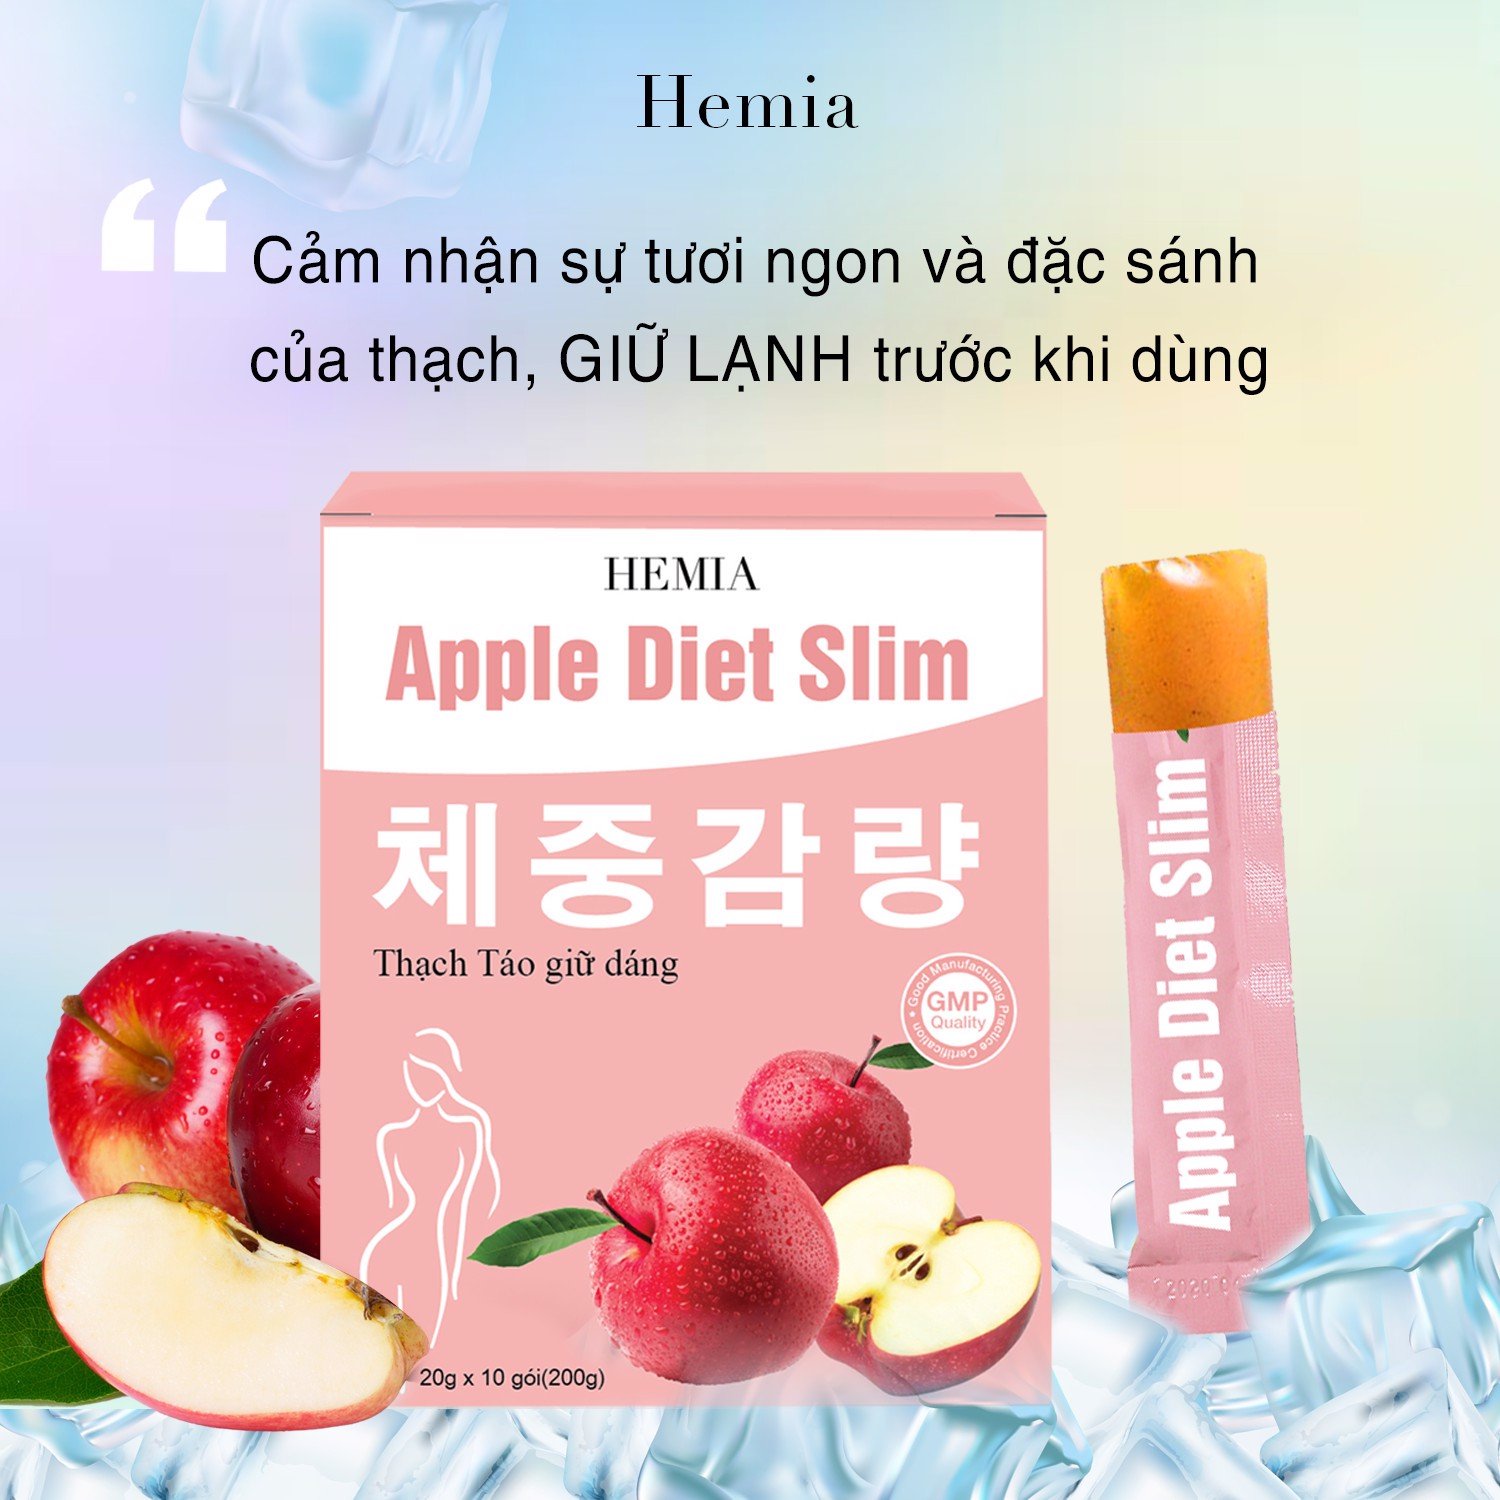 Thạch Táo Giảm Cân Hemia Apple Diet Slim